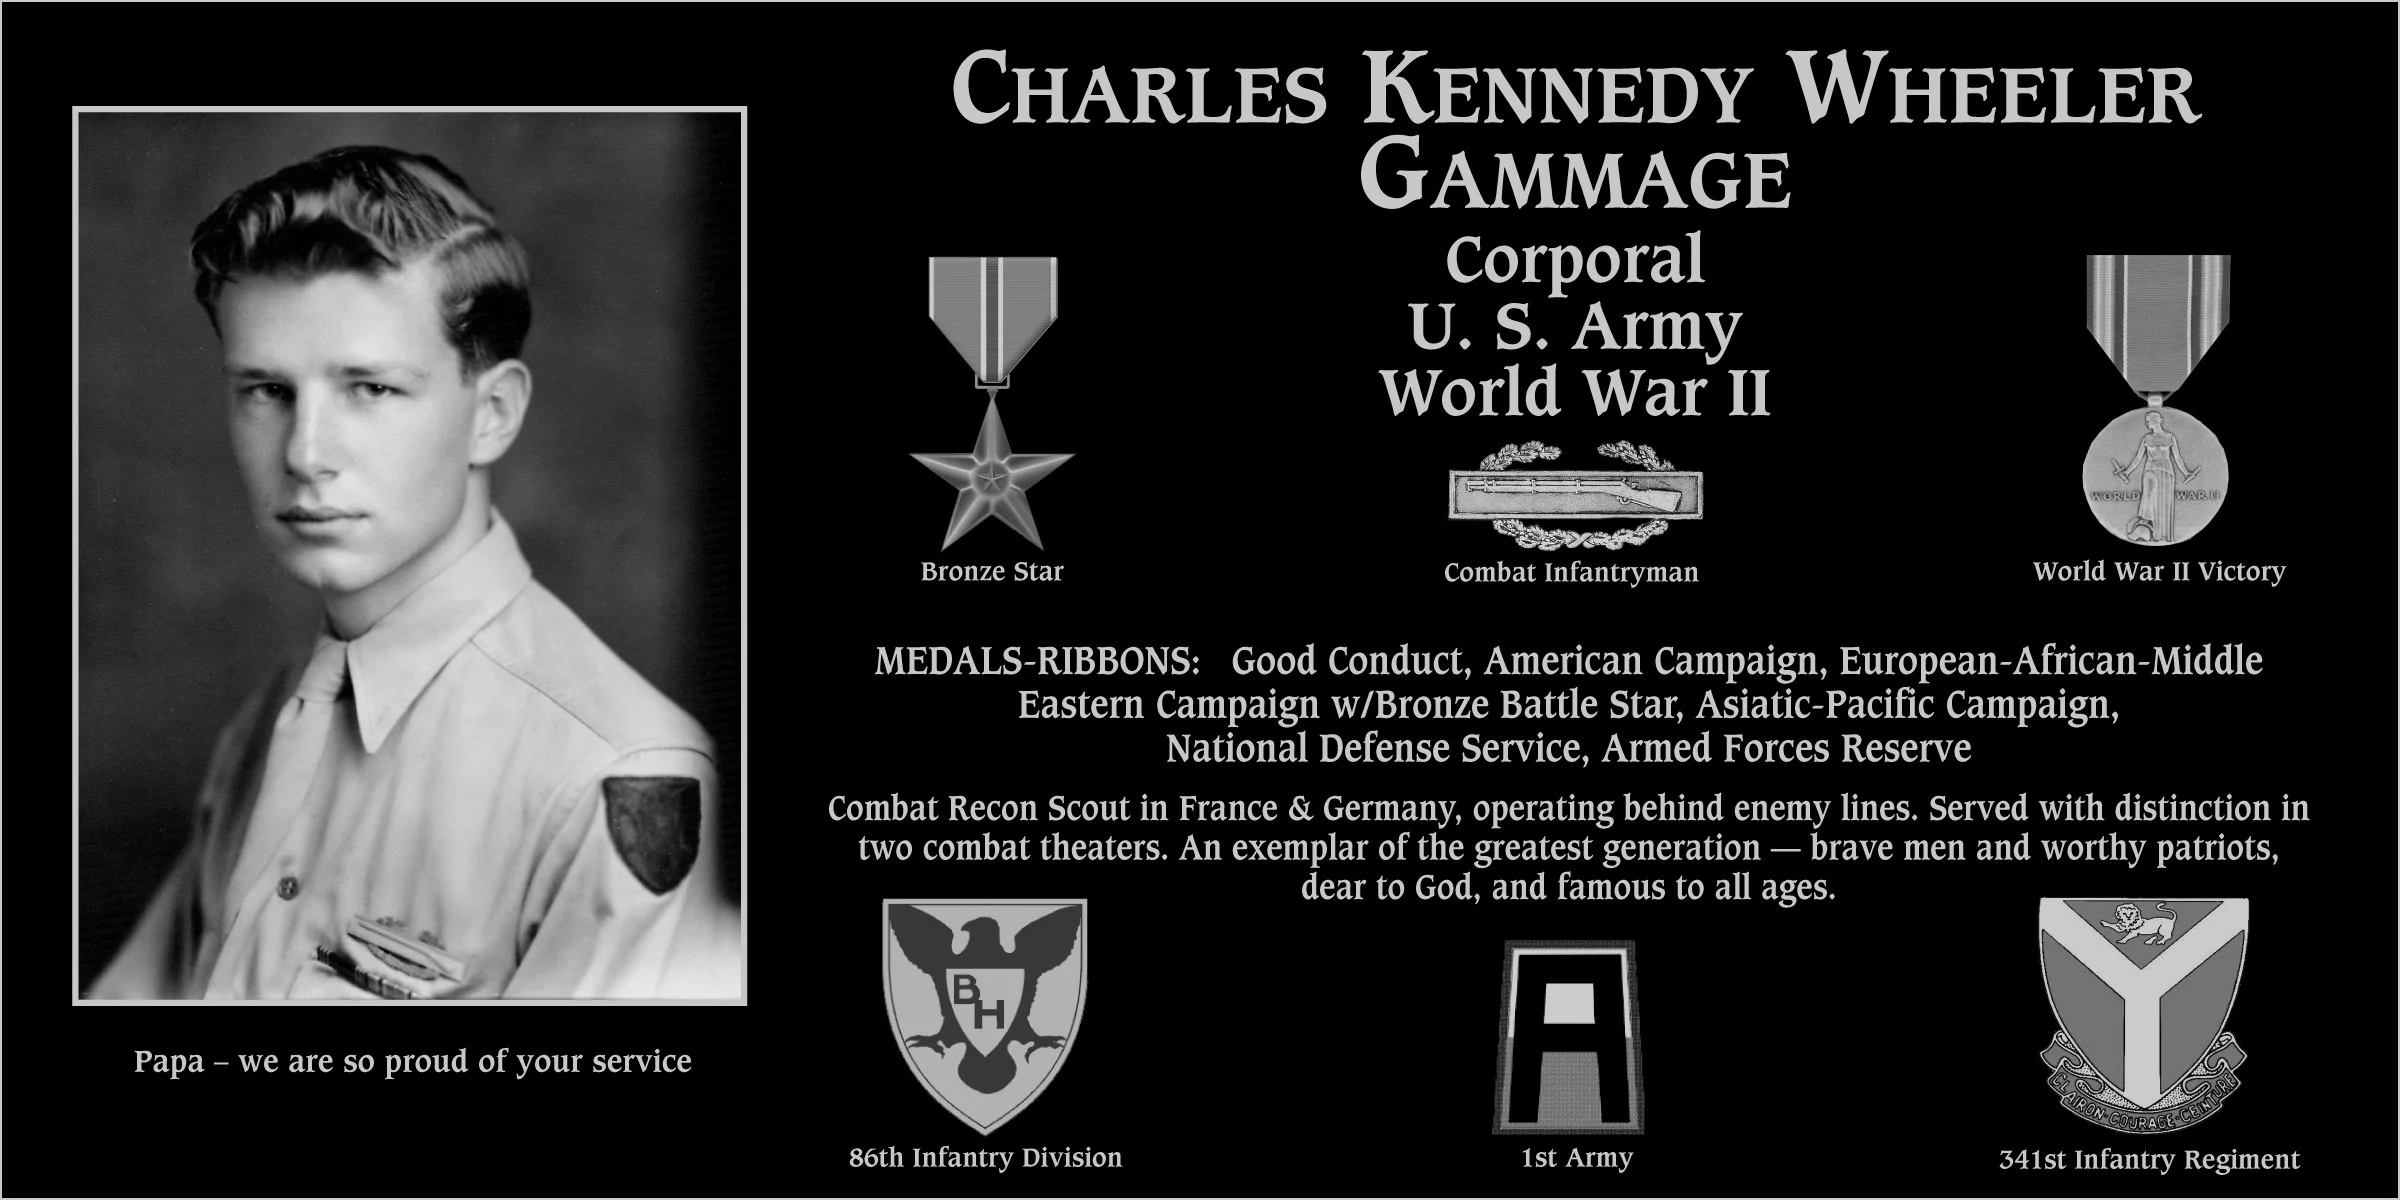 Charles Kennedy Wheeler Gammage